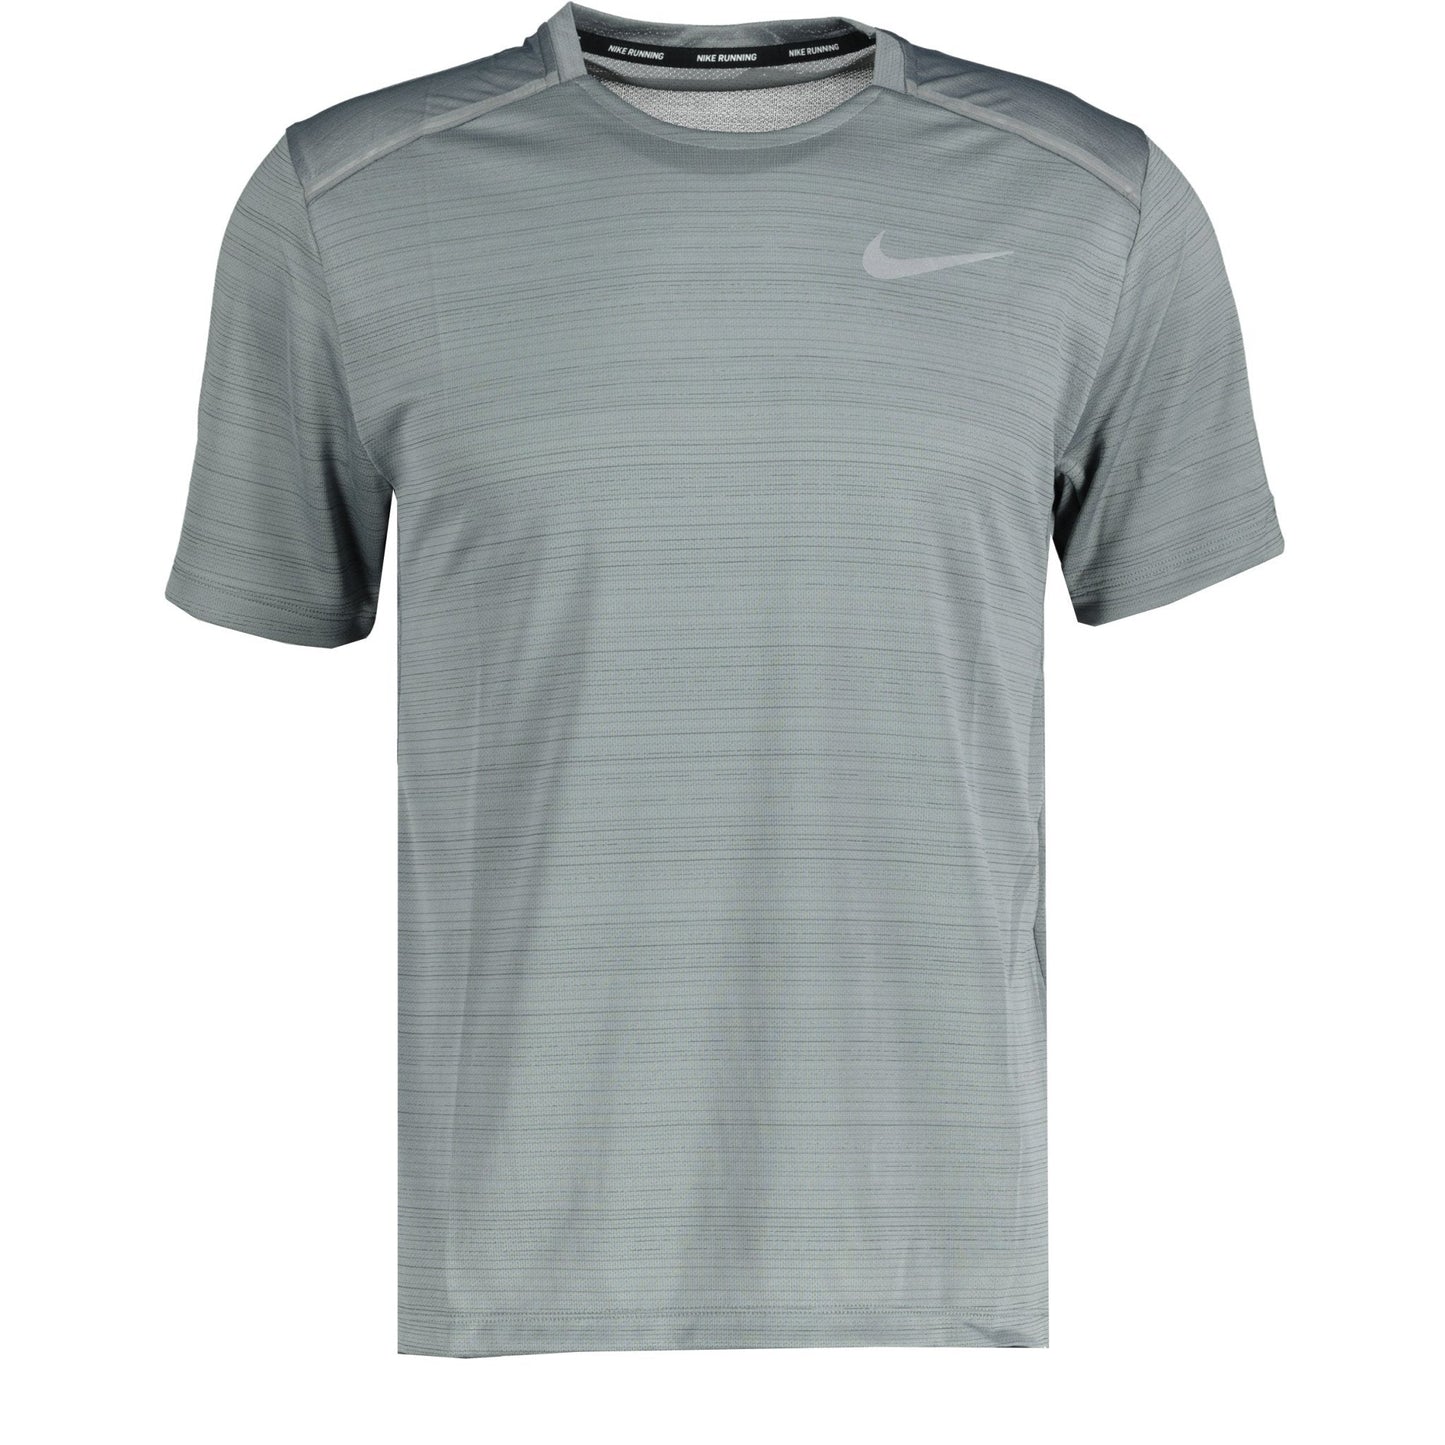 Nike Dri-Fit Miler Breathe T-Shirt Deep Grey - LinkFashionco